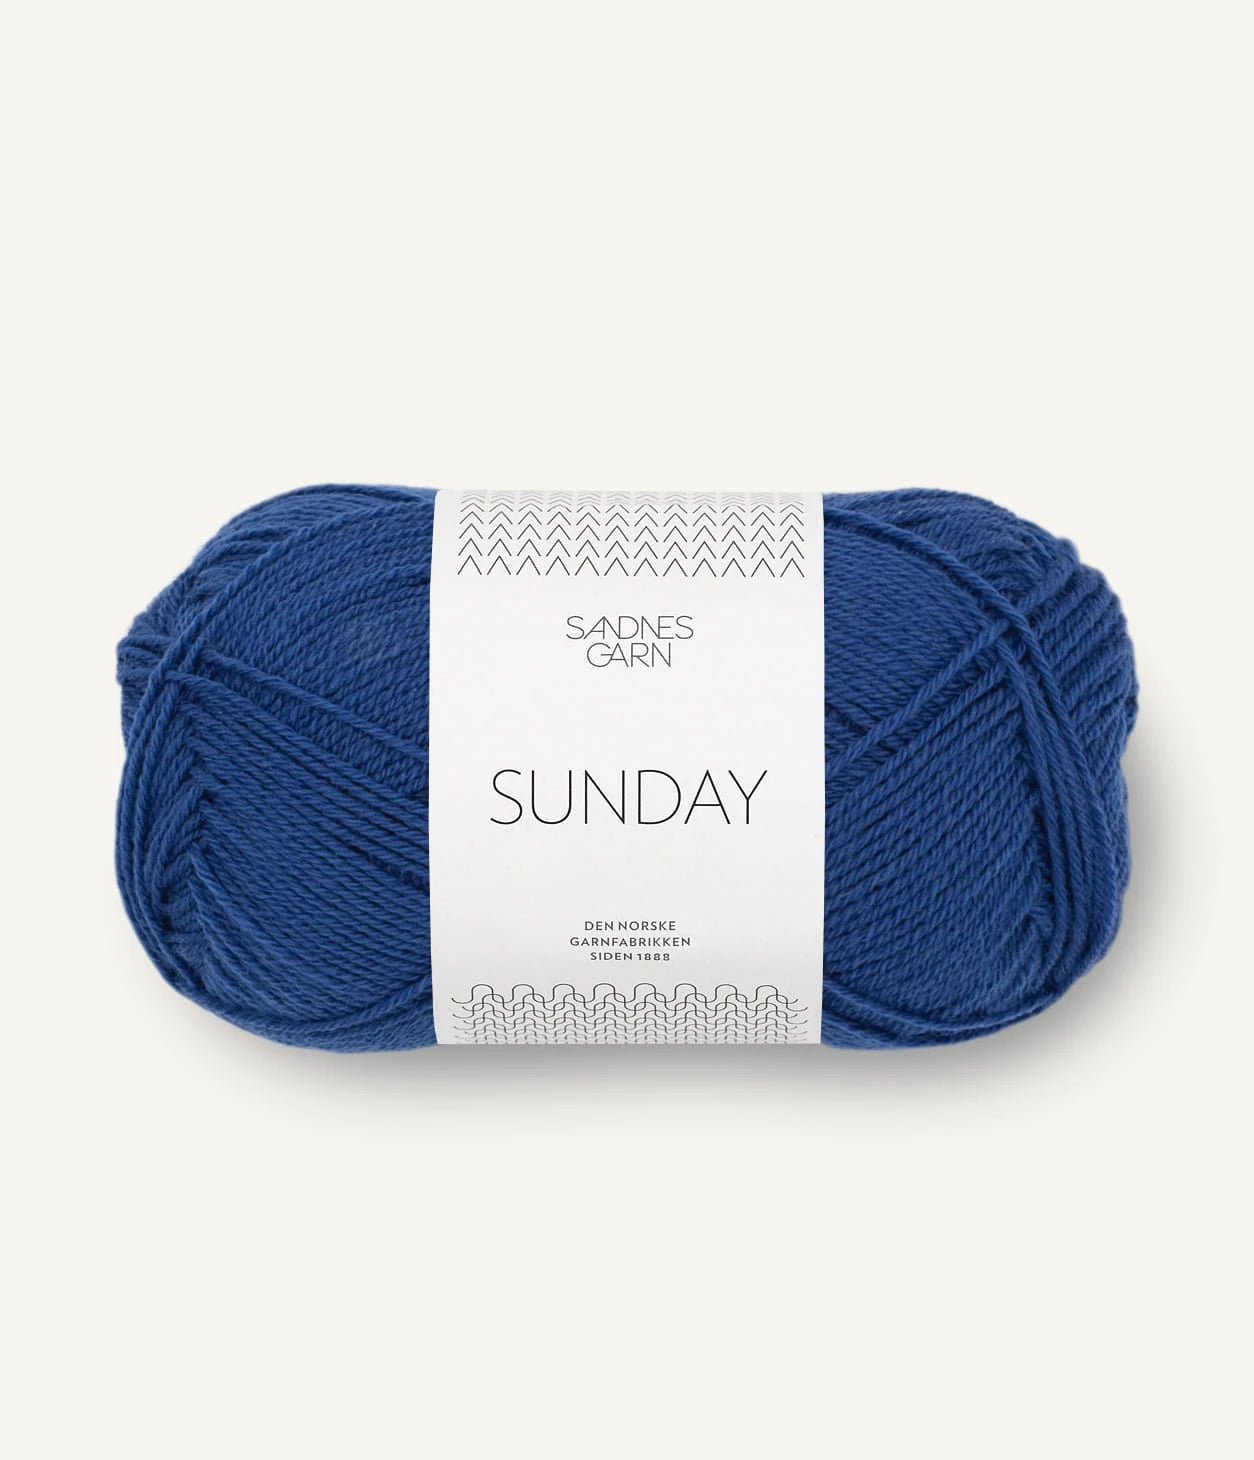 Kuvassa on Sandnes Garn Sunday lanka (yarn) värissä Blå.